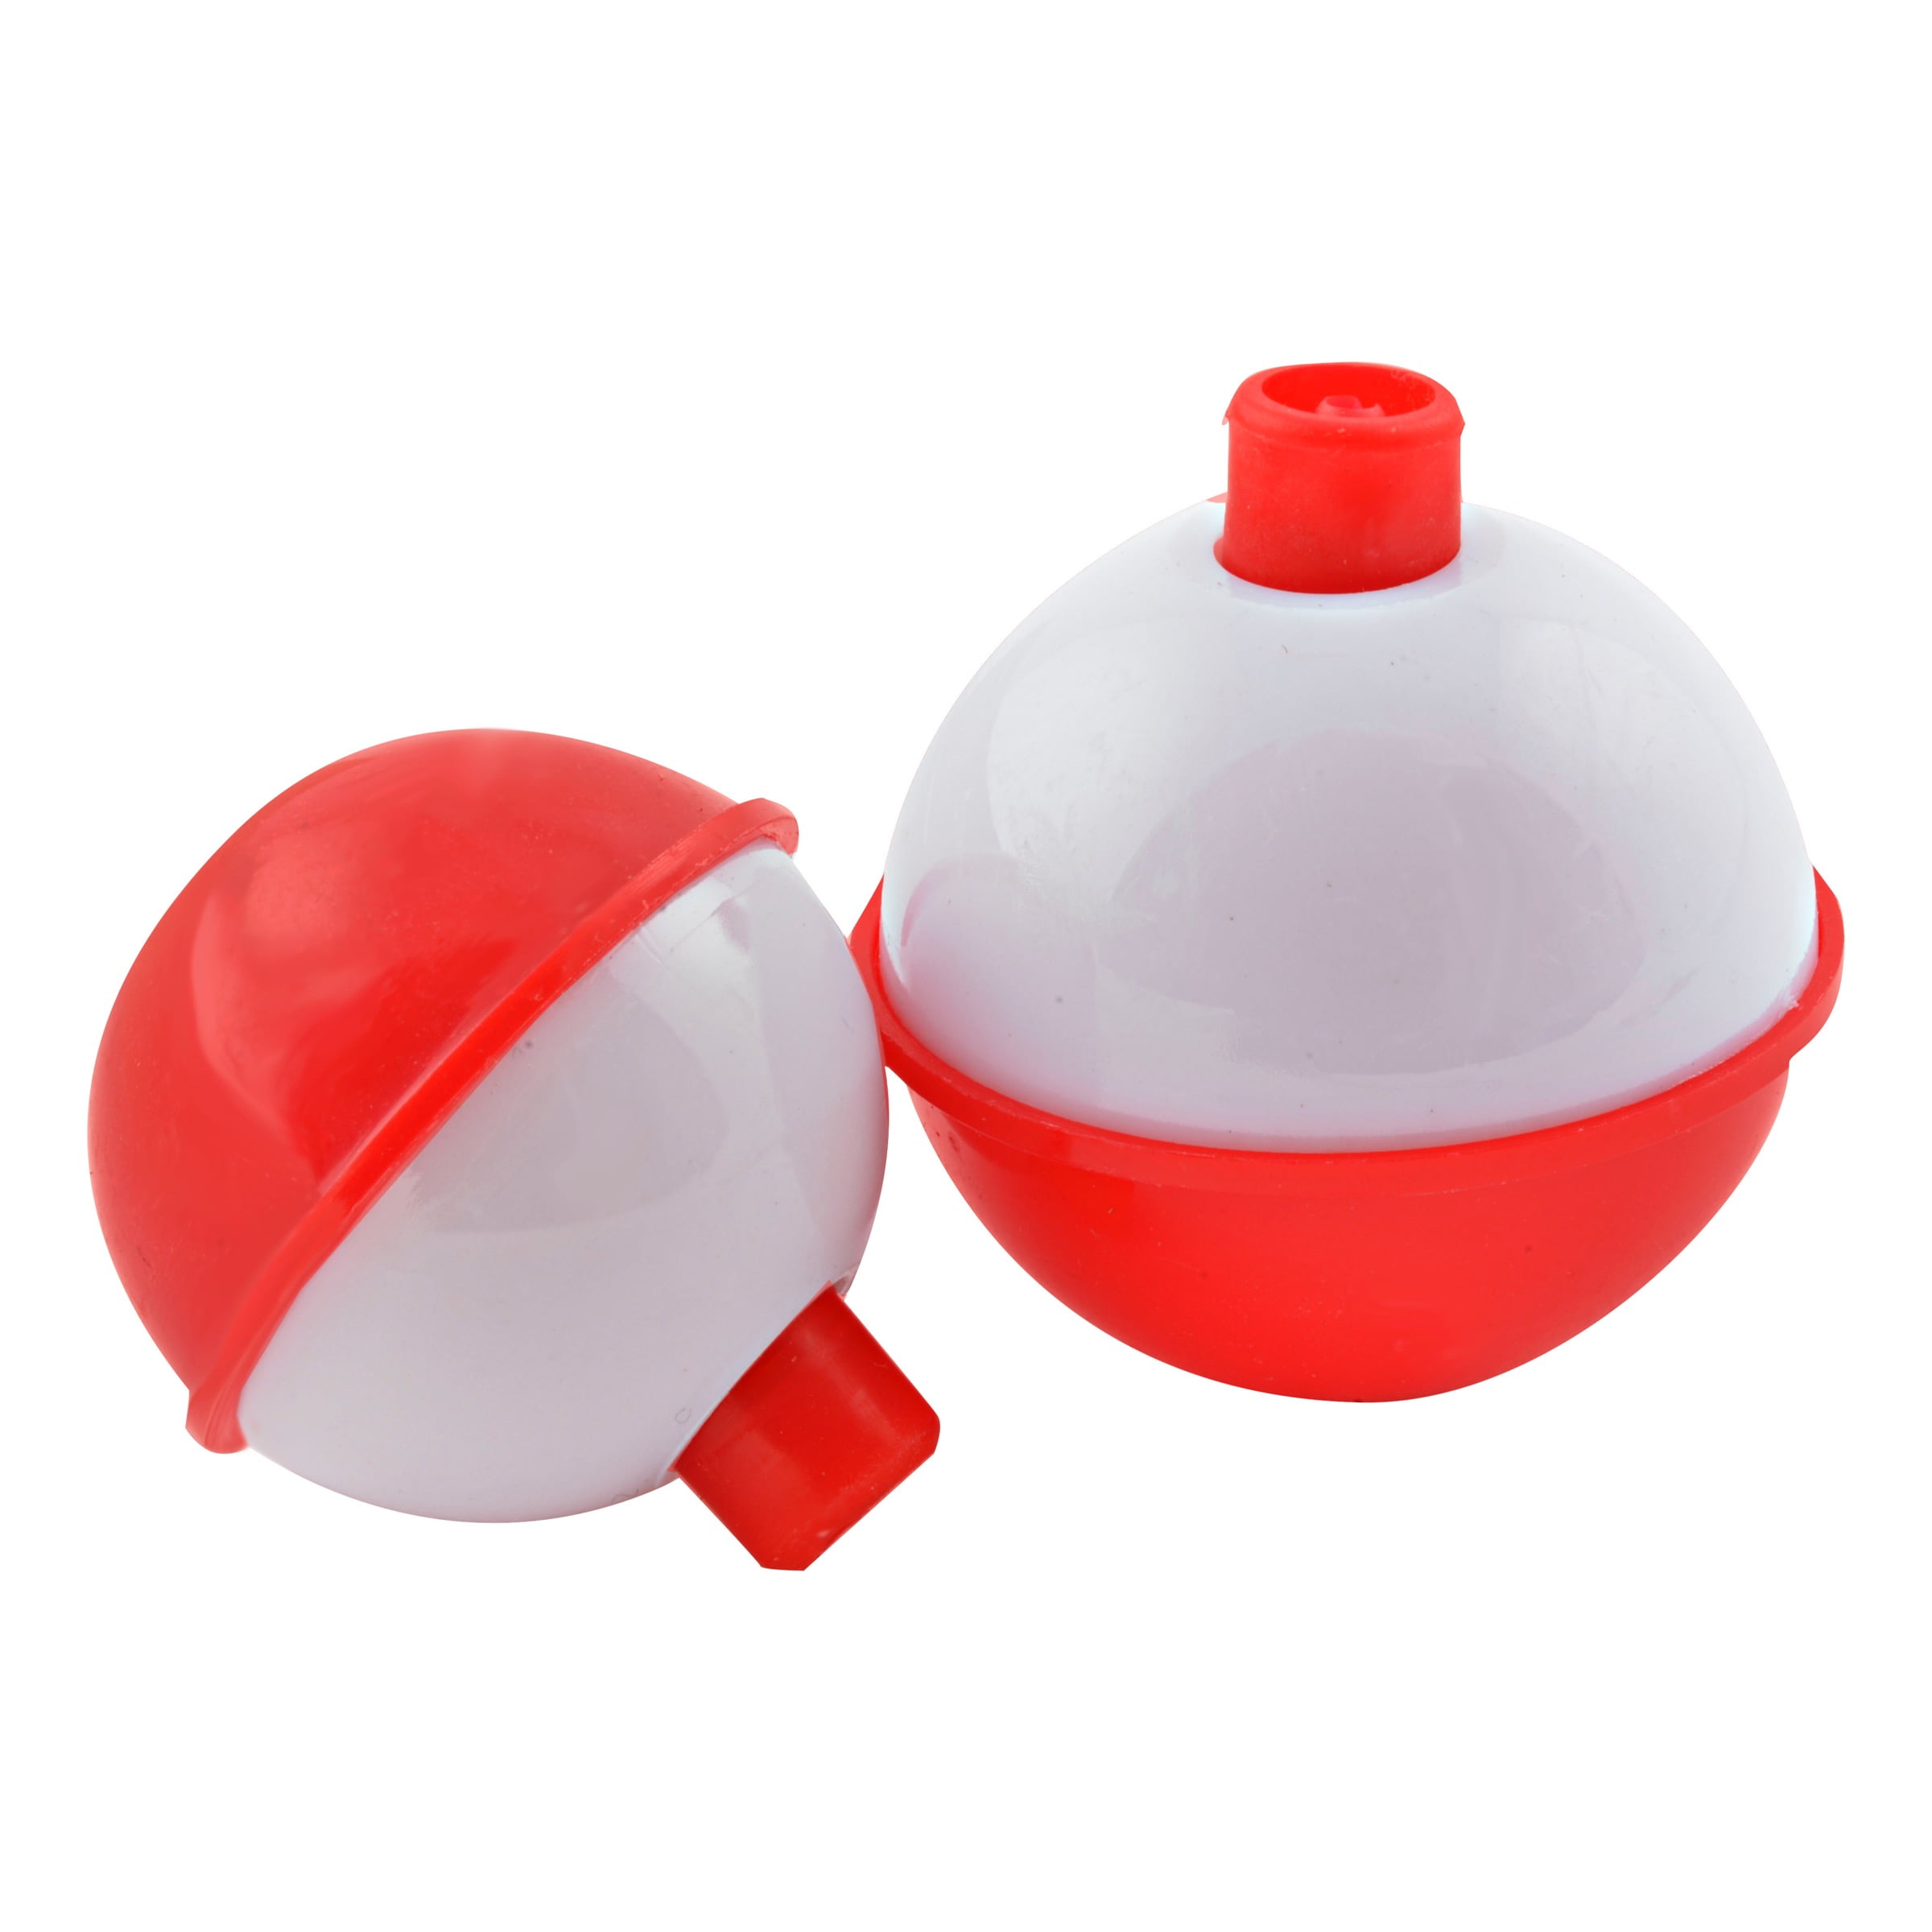 10 25 & 50-PACK 2.5 inch RED/WHITE ROUND PLASTIC BOBBERS 